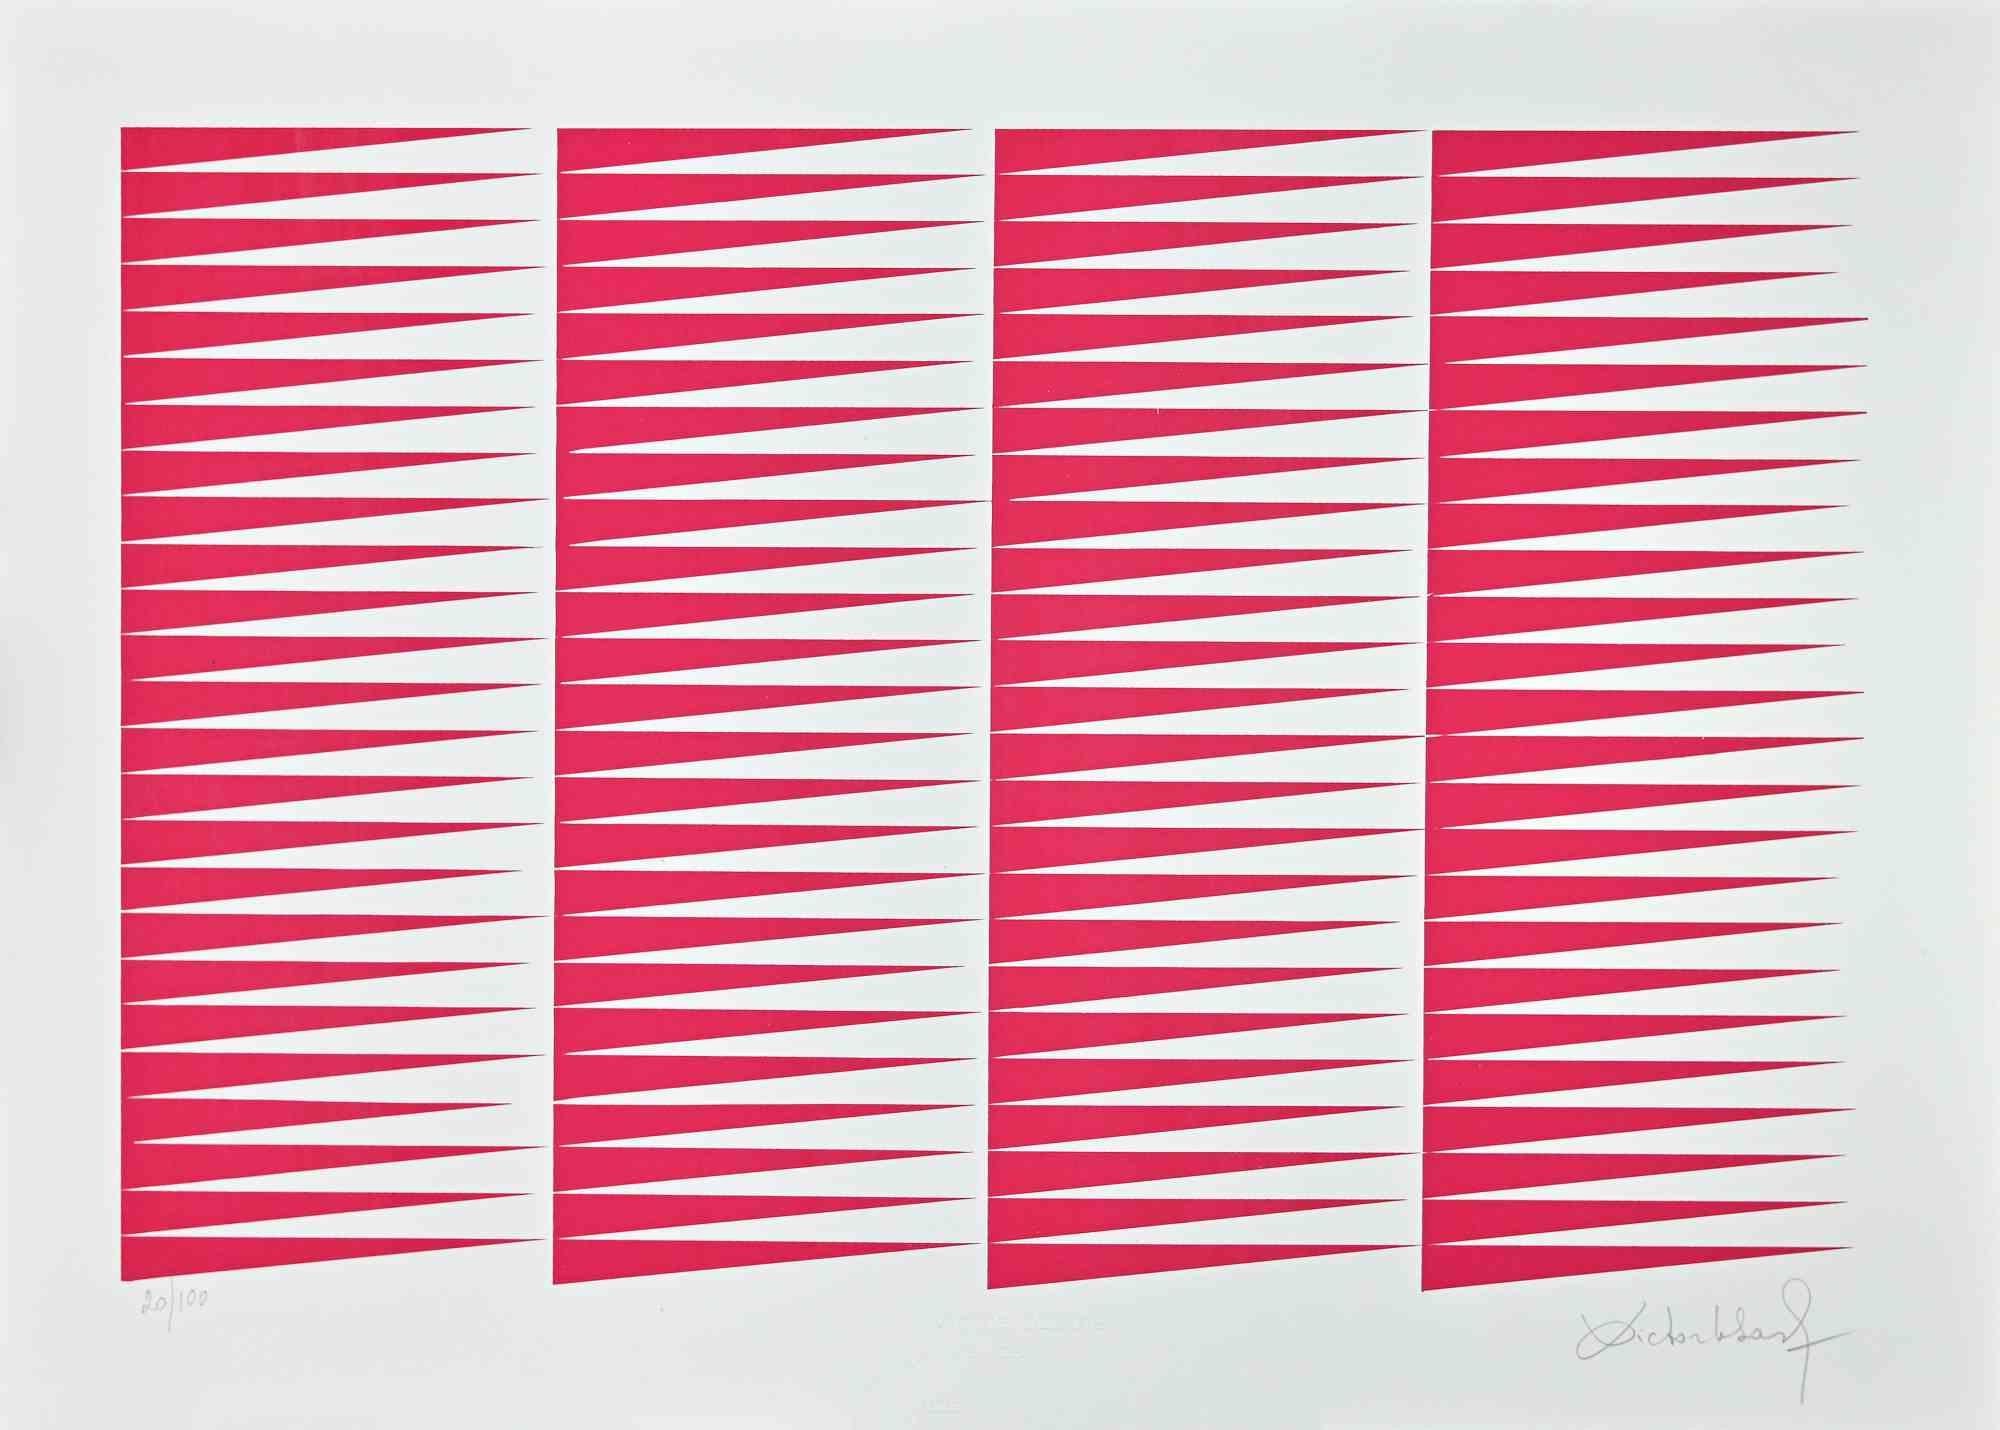 Fuchsine Composition - Screen Print by Victor Debach - 1970s